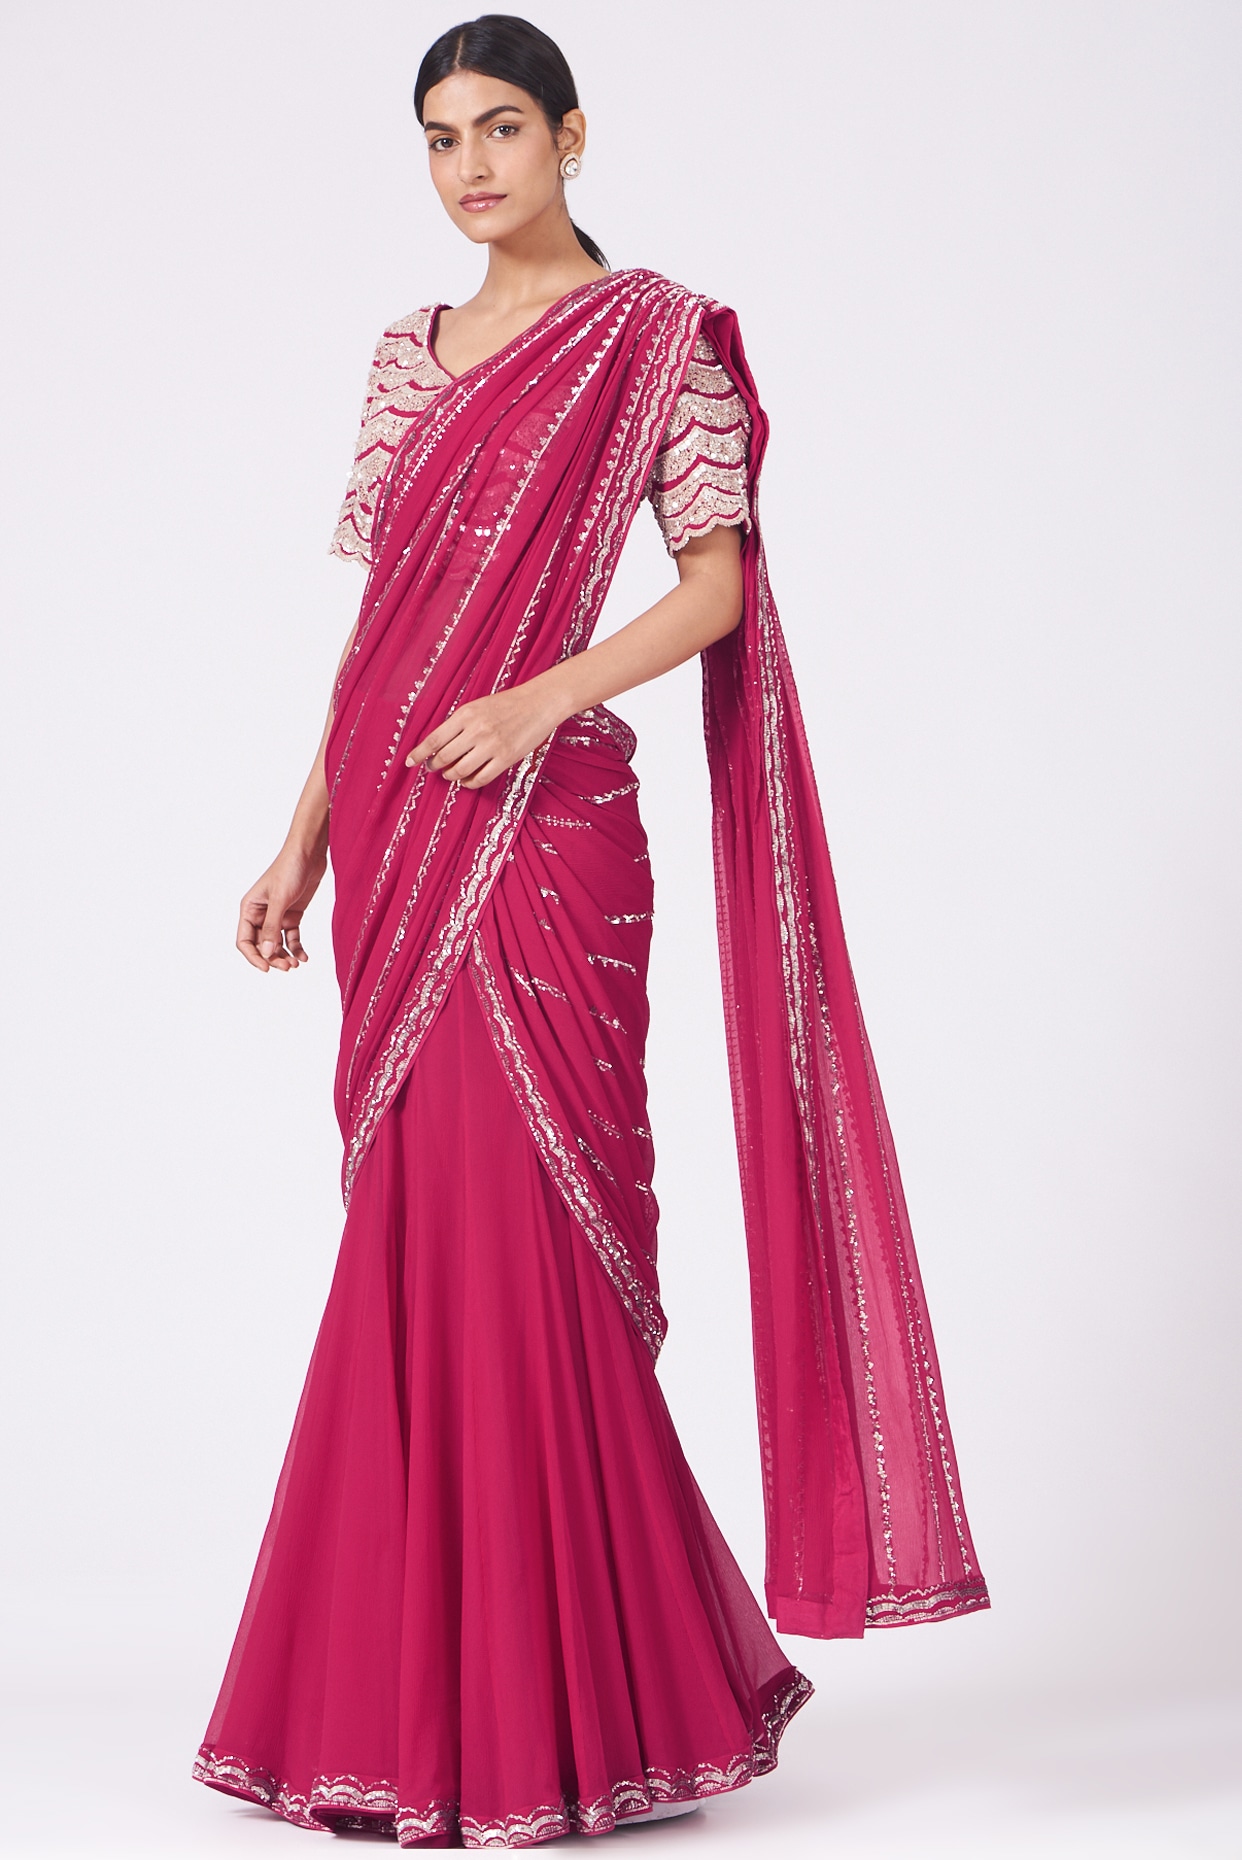 Discover more than 176 lehenga saree design for girls super hot